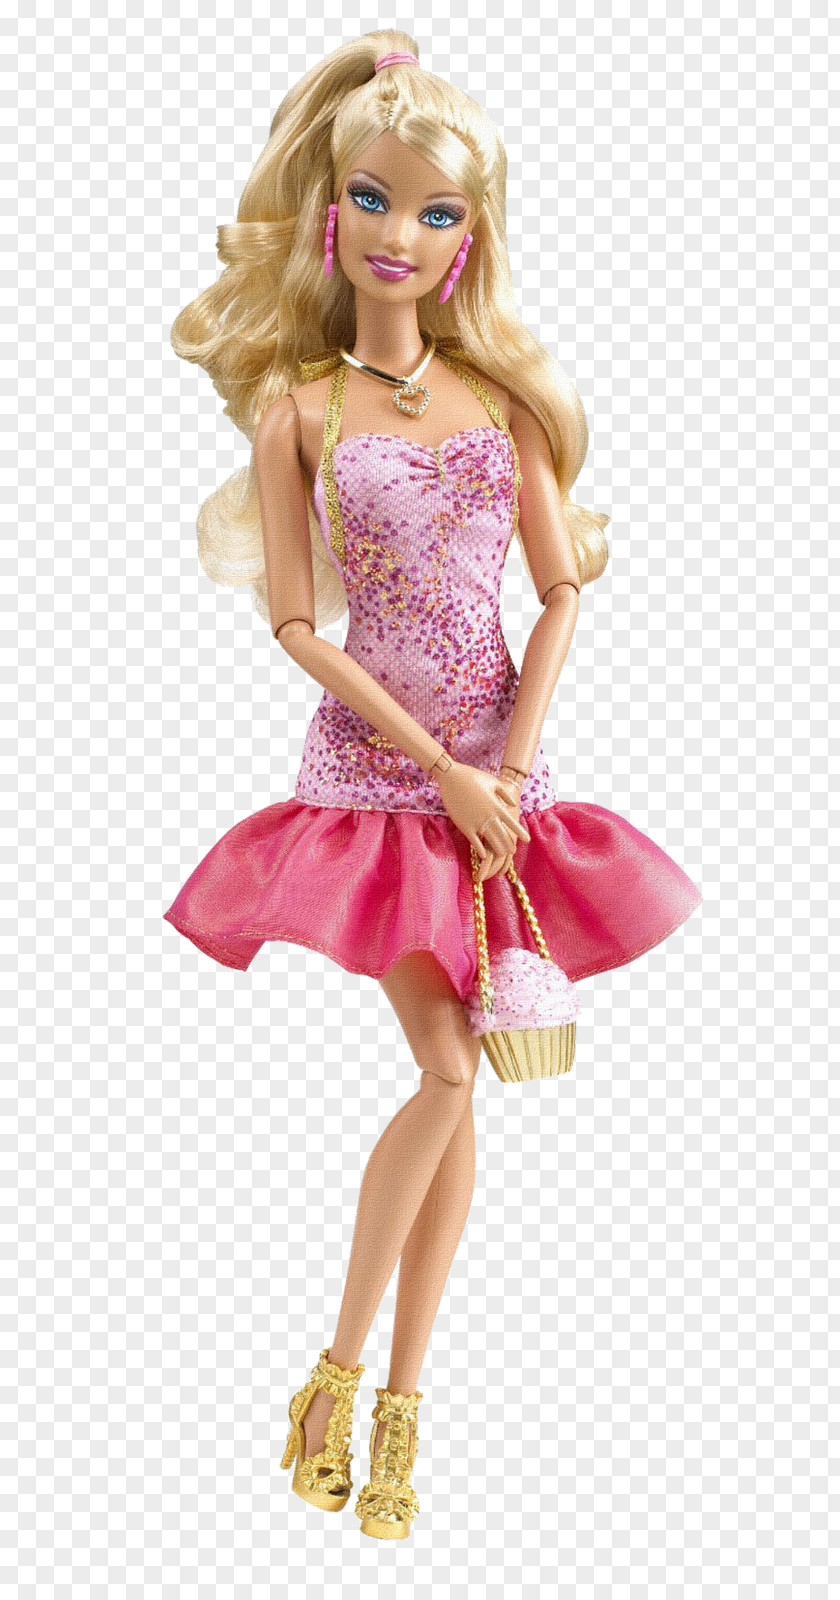 Doll Amazon.com Ken Barbie Toy PNG